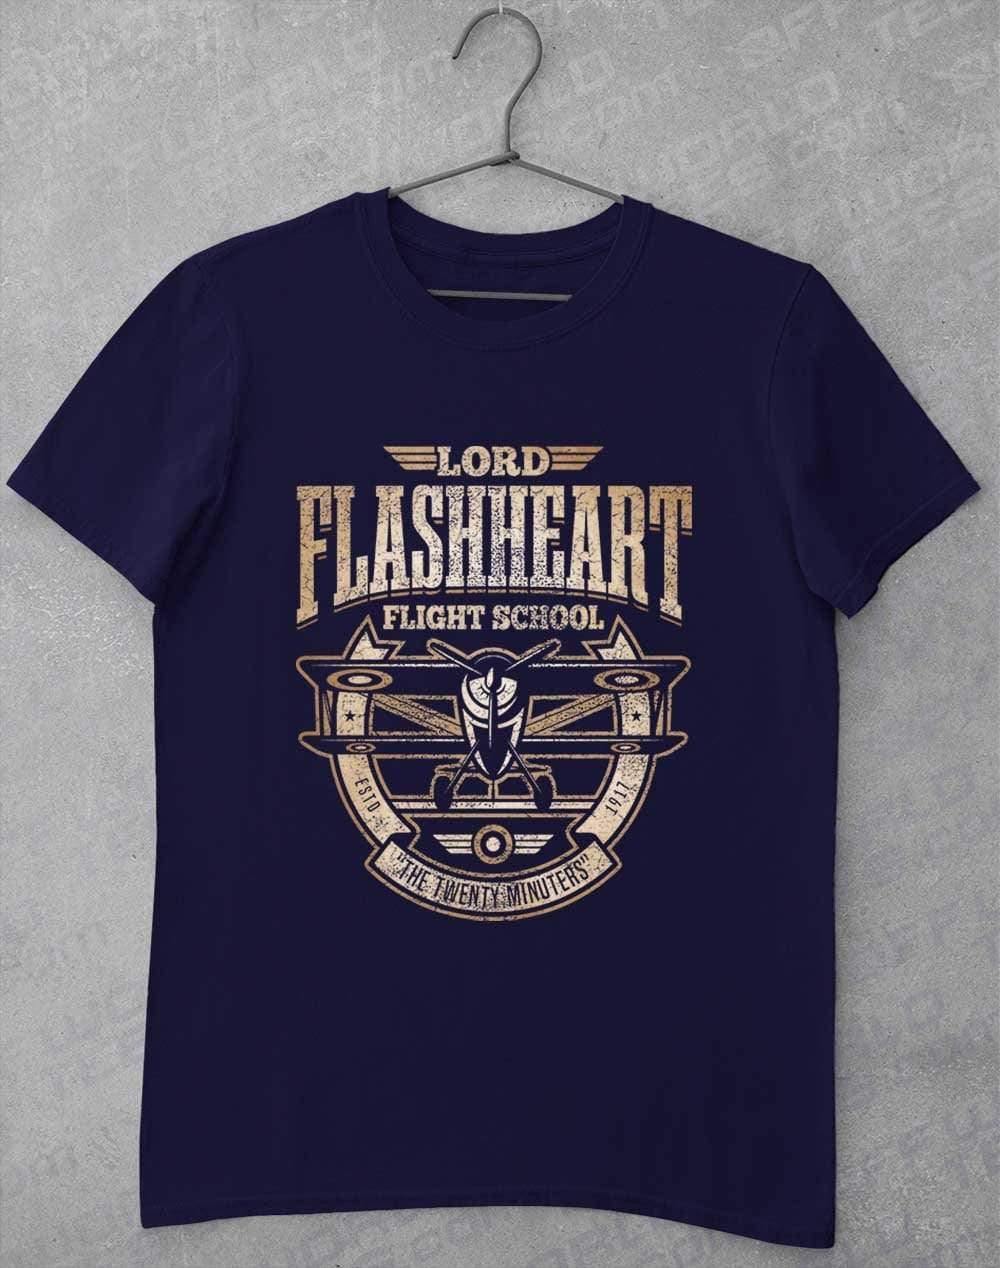 Flashheart's Flight School T-Shirt S / Navy  - Off World Tees